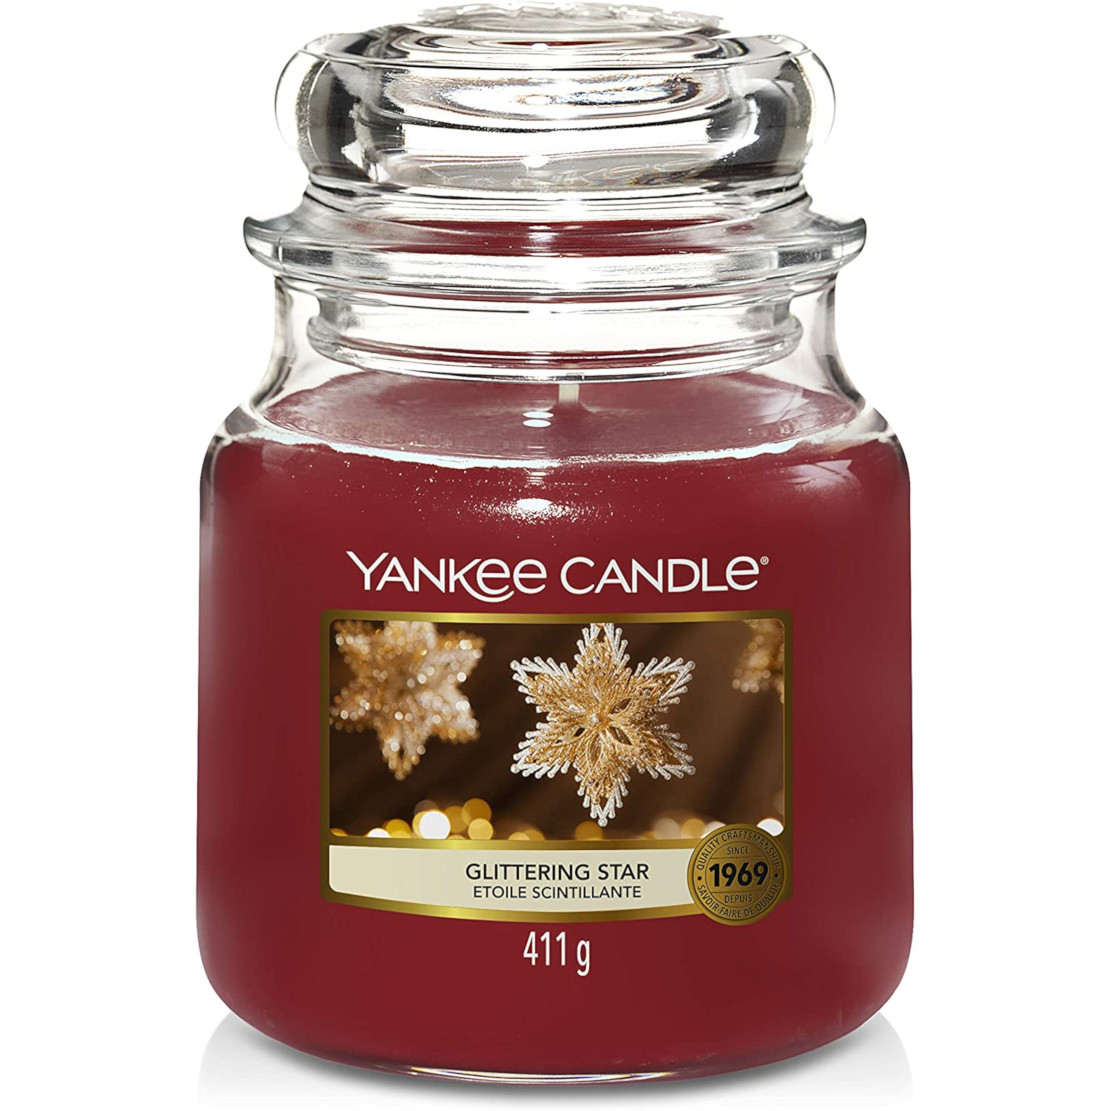 Yankee Candle Glittering Star Medium Jar